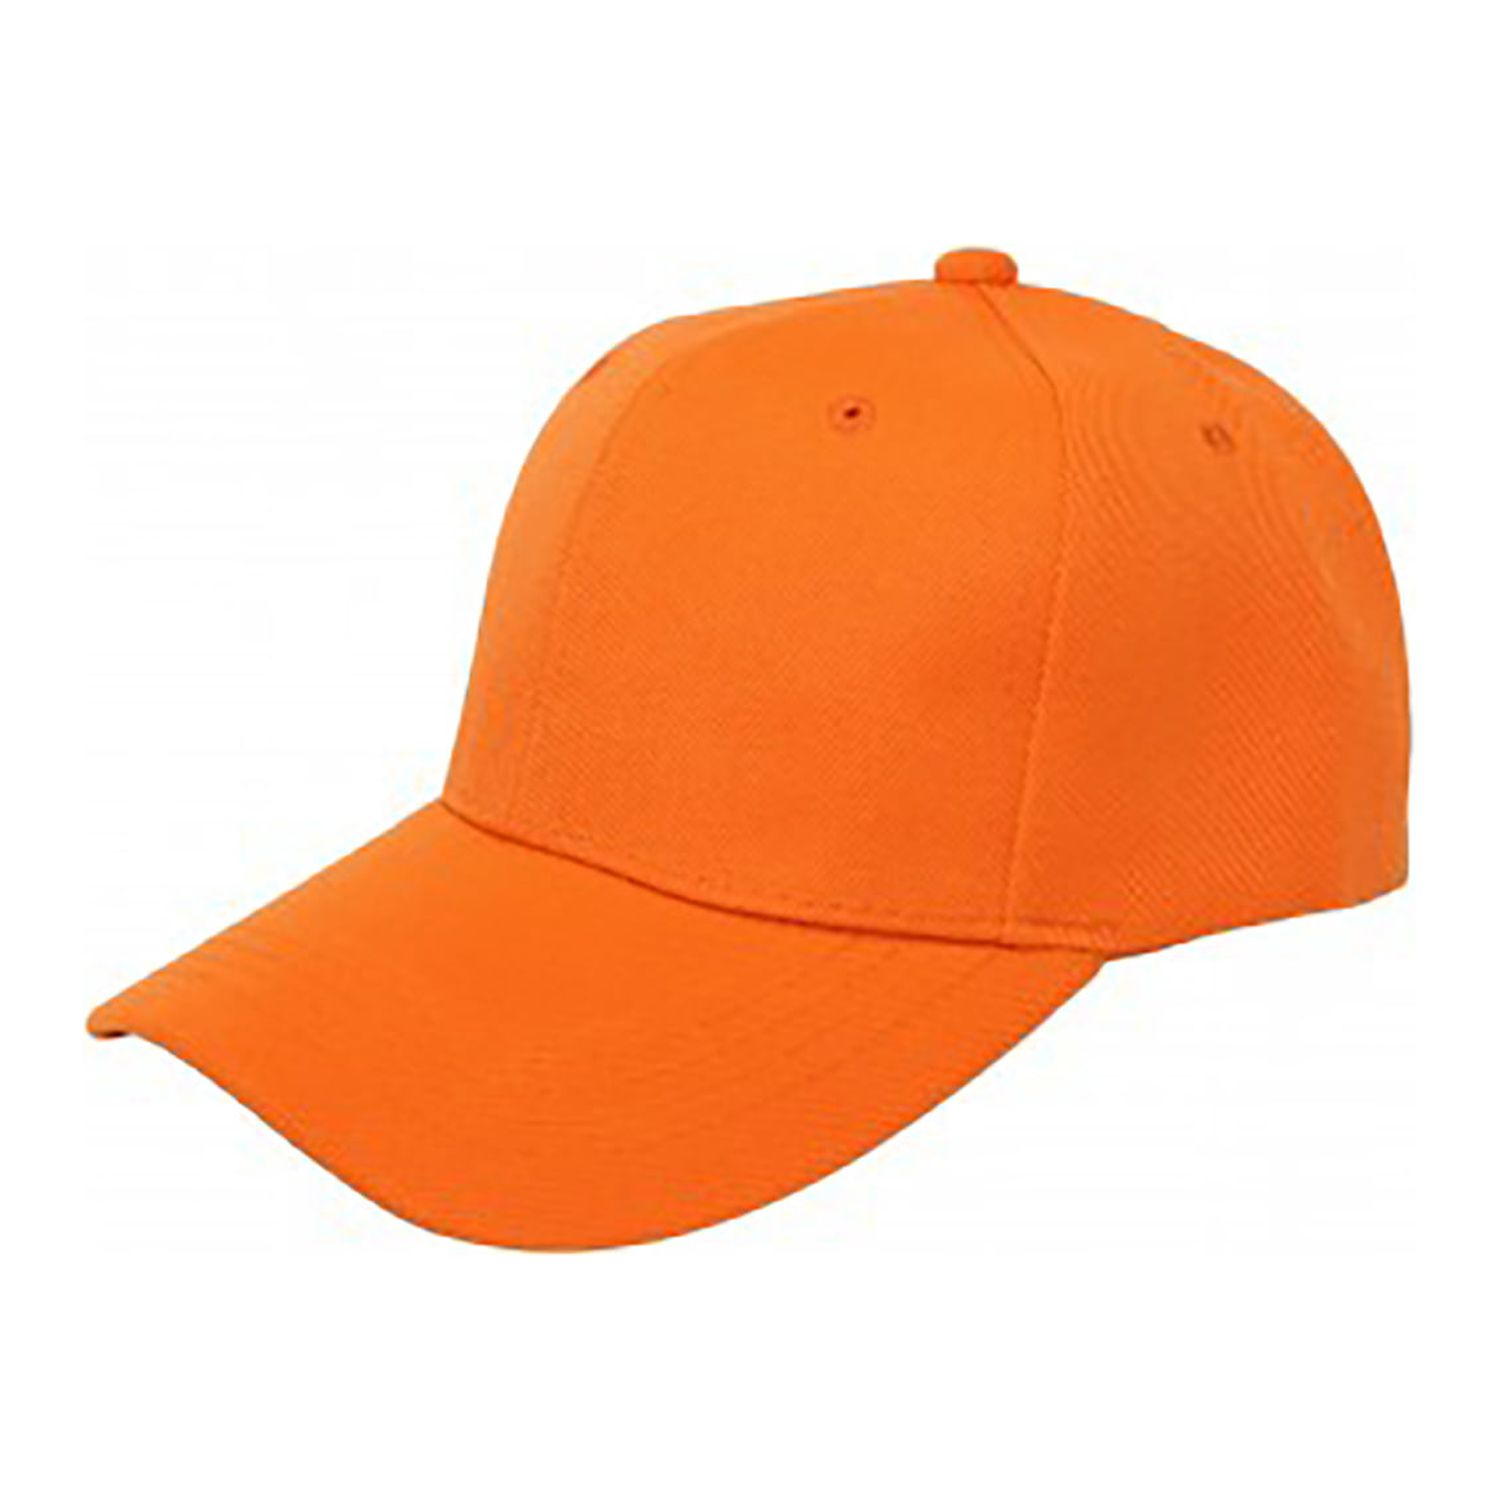 Pack of 15 Bulk Wholesale Plain Baseball Cap Hat Adjustable (Orange) - image 1 of 4